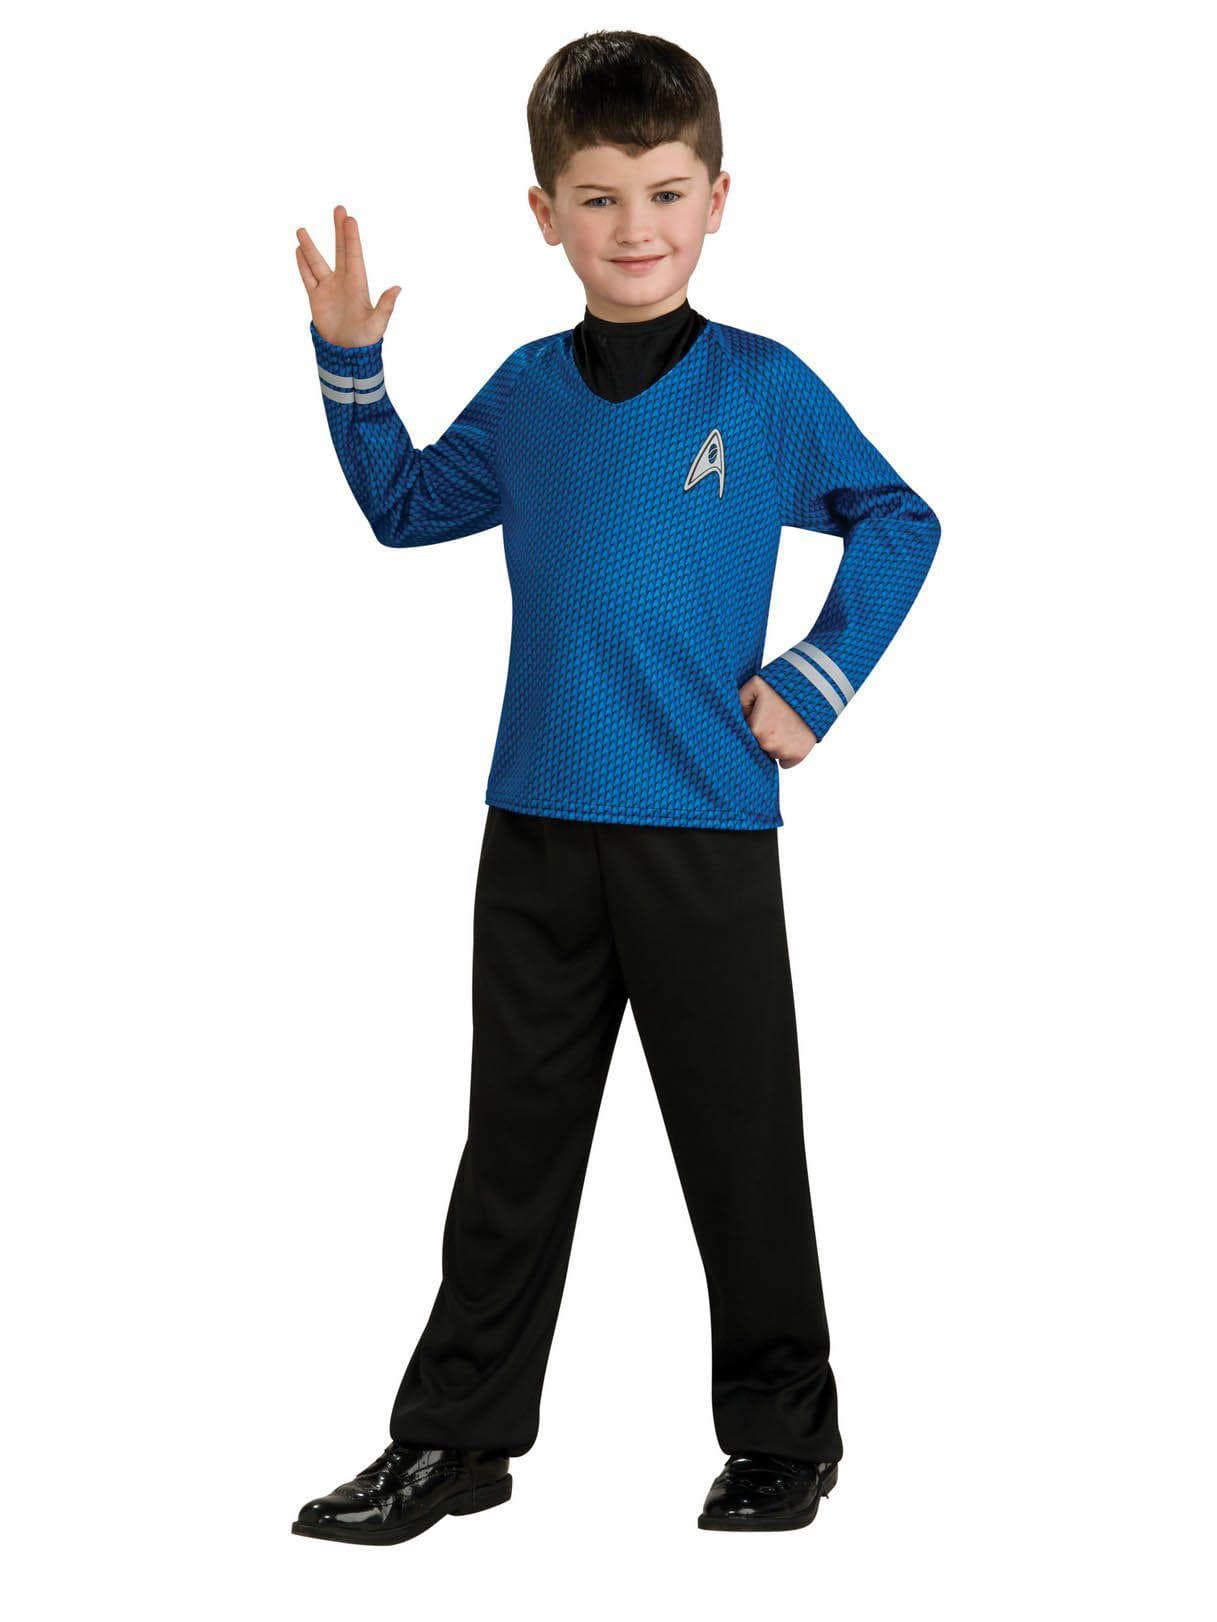 Kids Star Trek Spock Costume - costumes.com